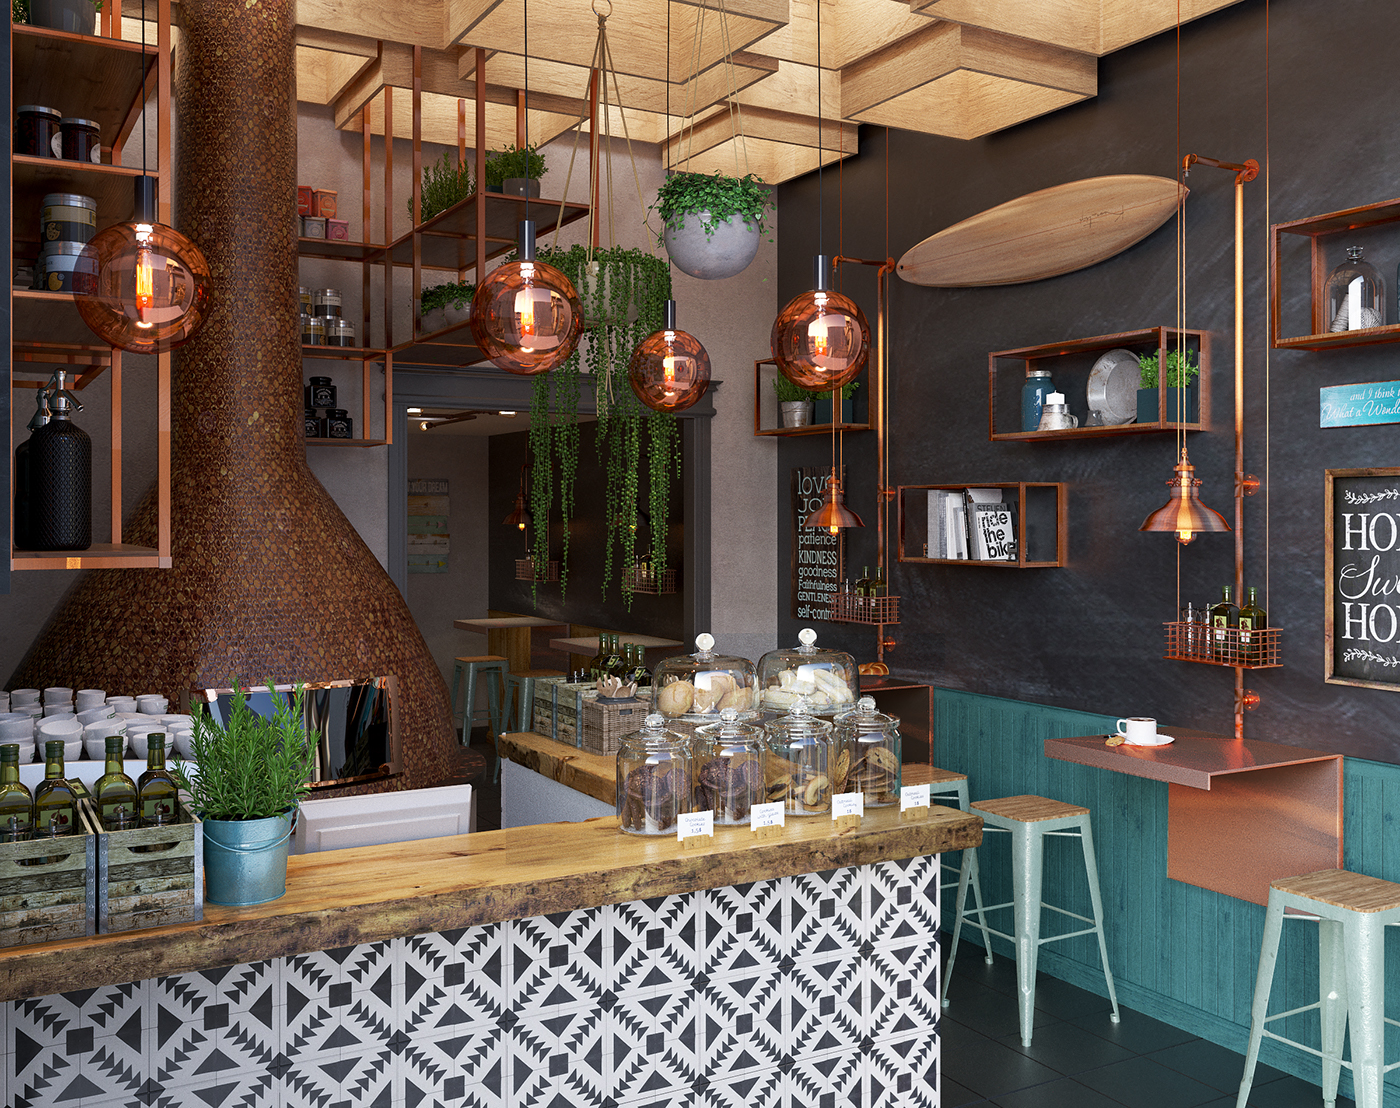 дизайн дизайн интерьера интерьер кафе cafe interior cafe design interior design HORECA restaurant Coffee House